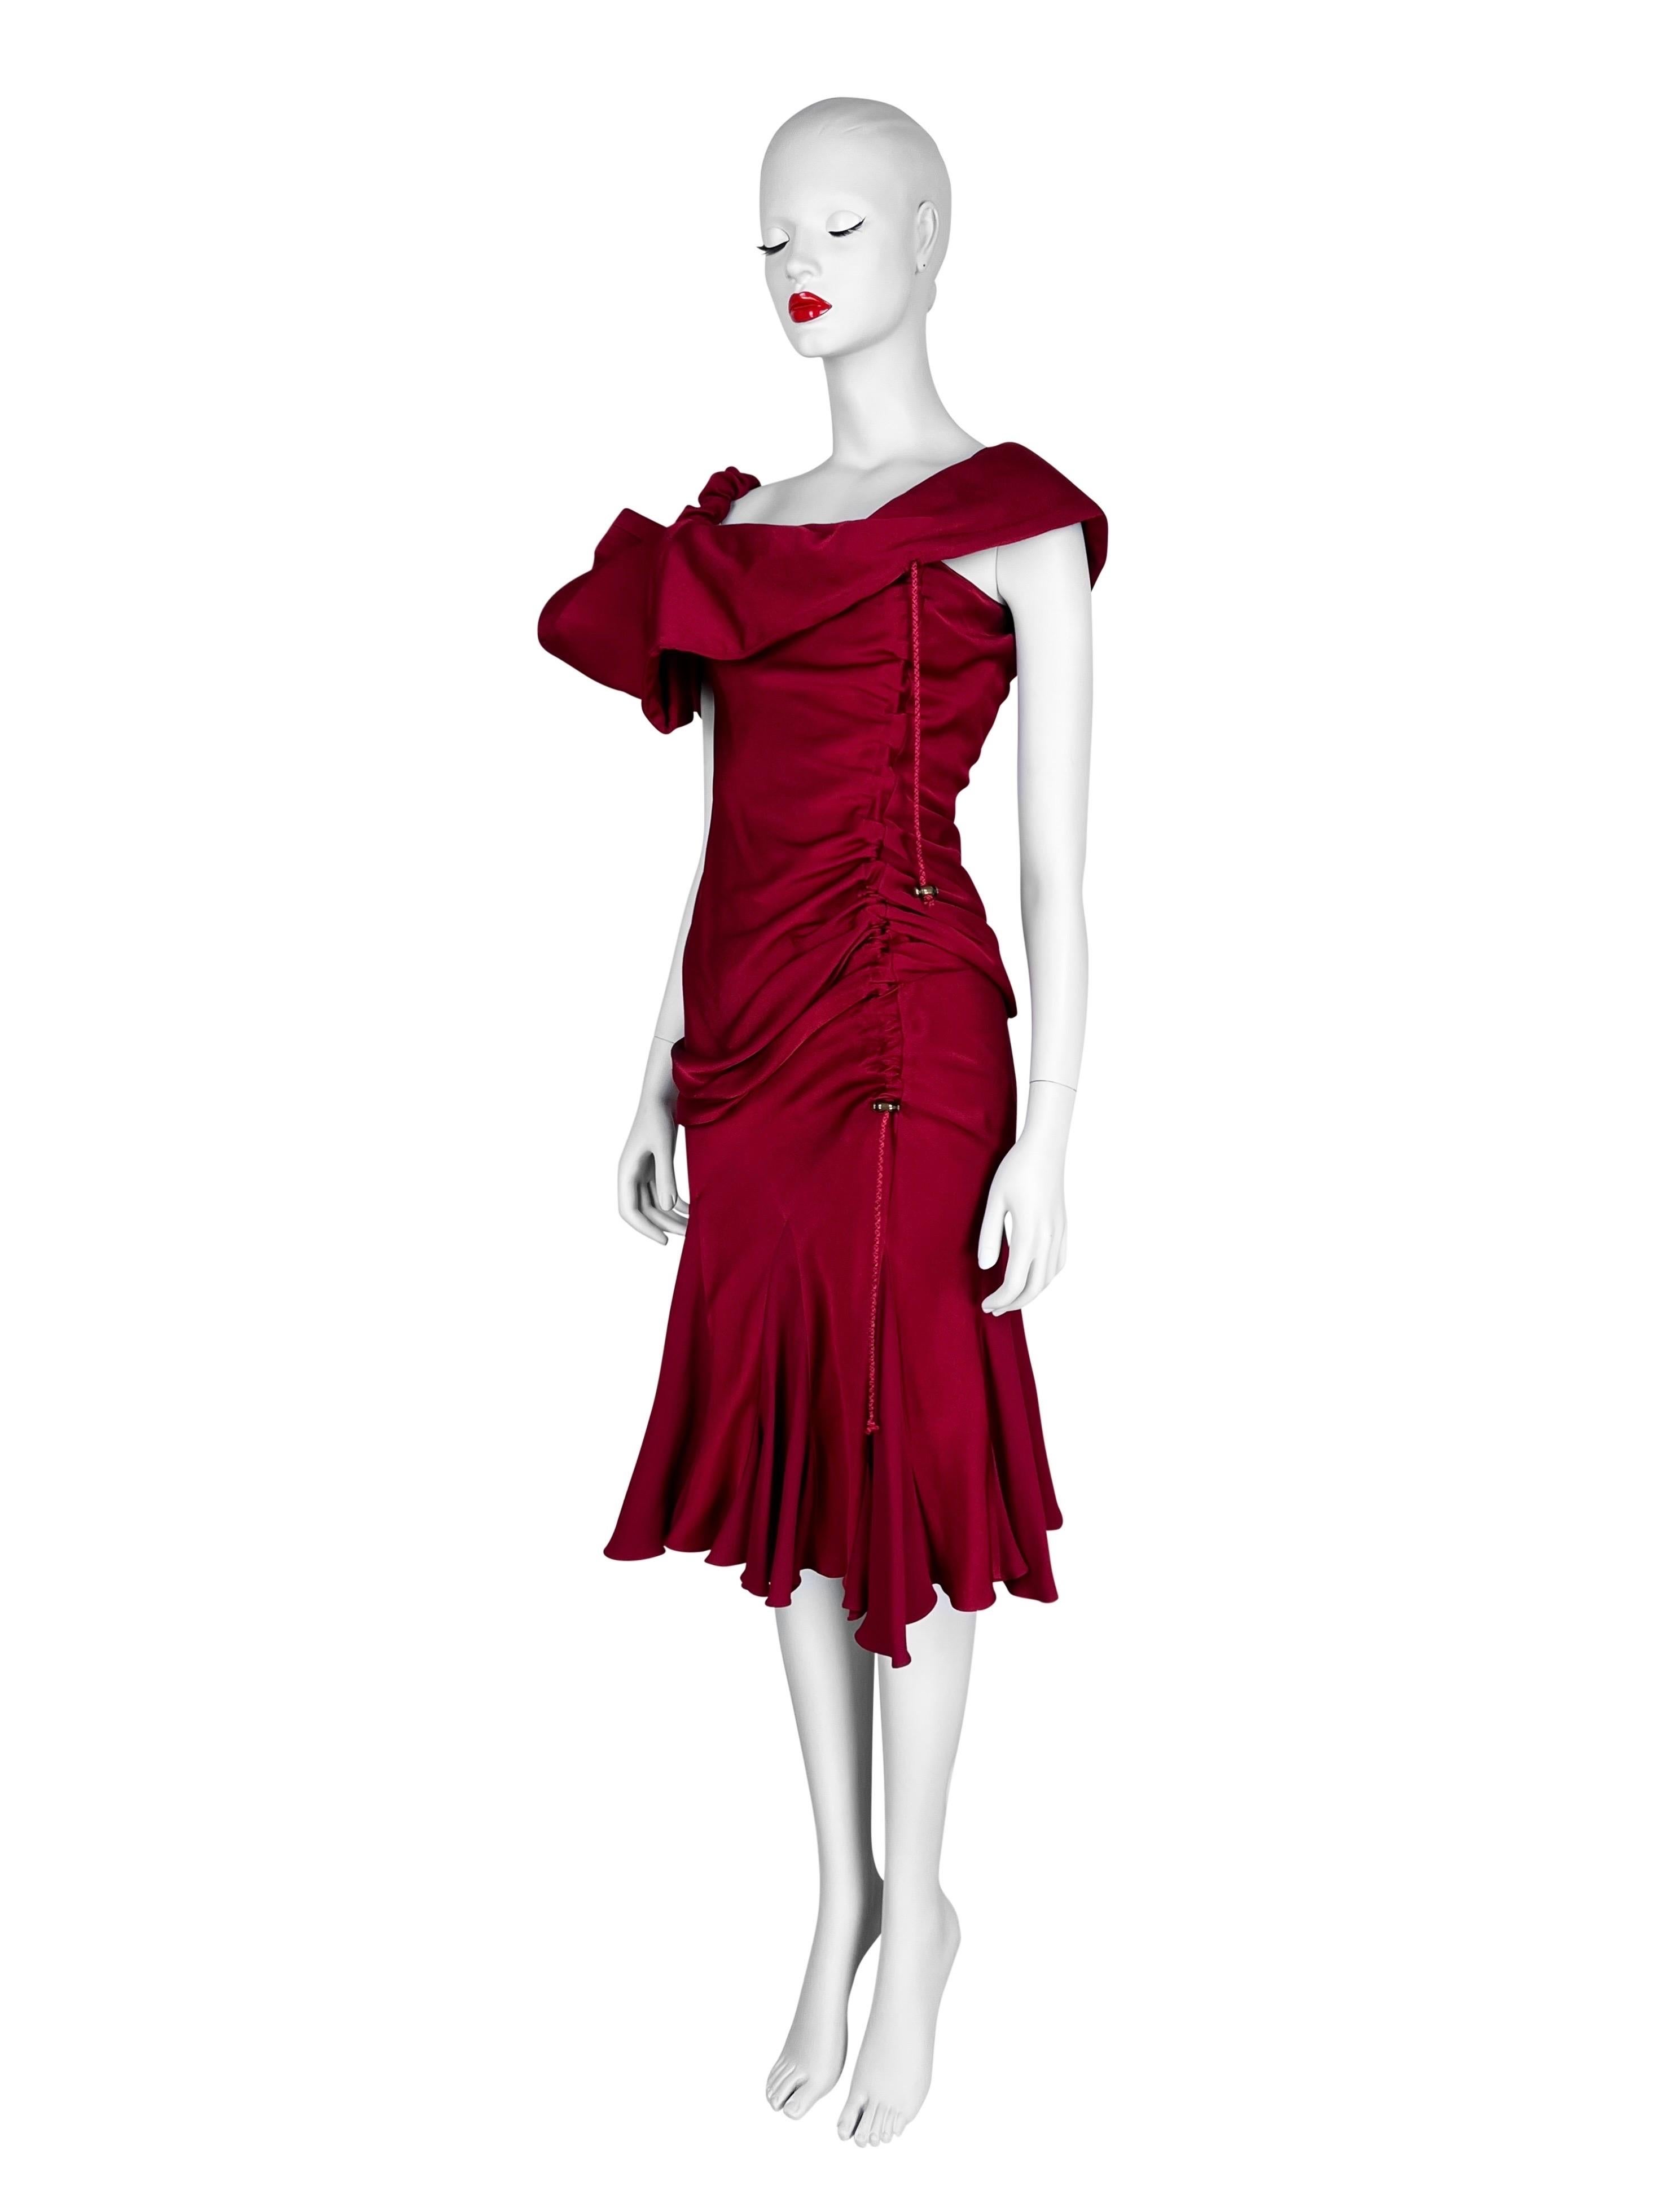 John Galliano Fall 2002 Red Draped Dress For Sale 2